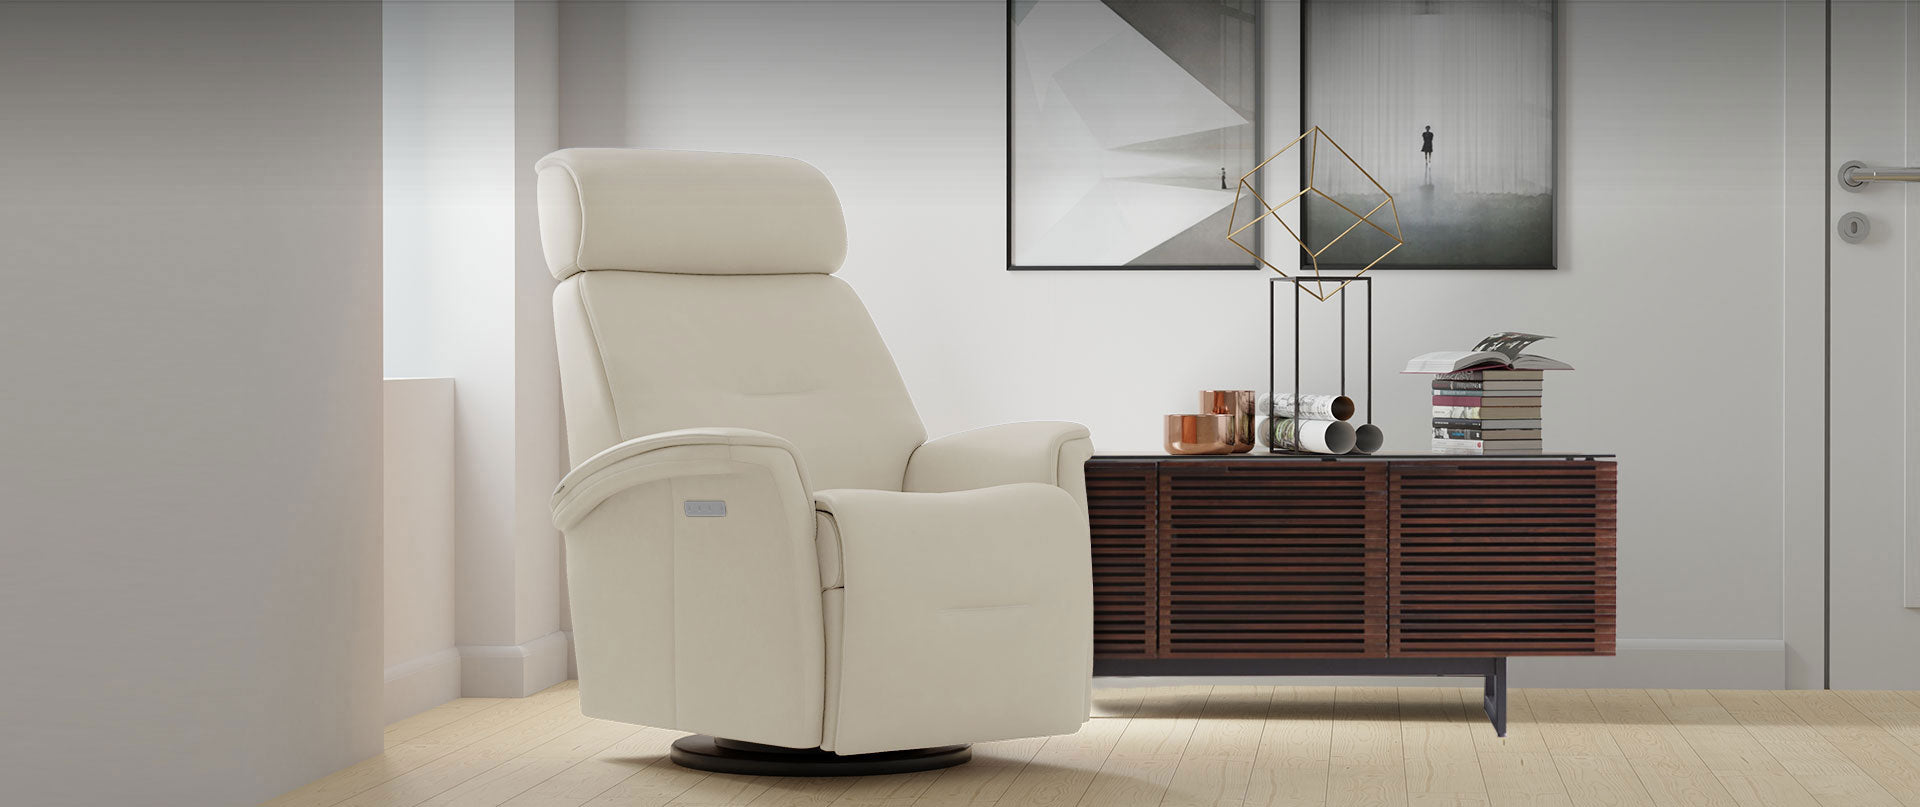 Empire recliner chair